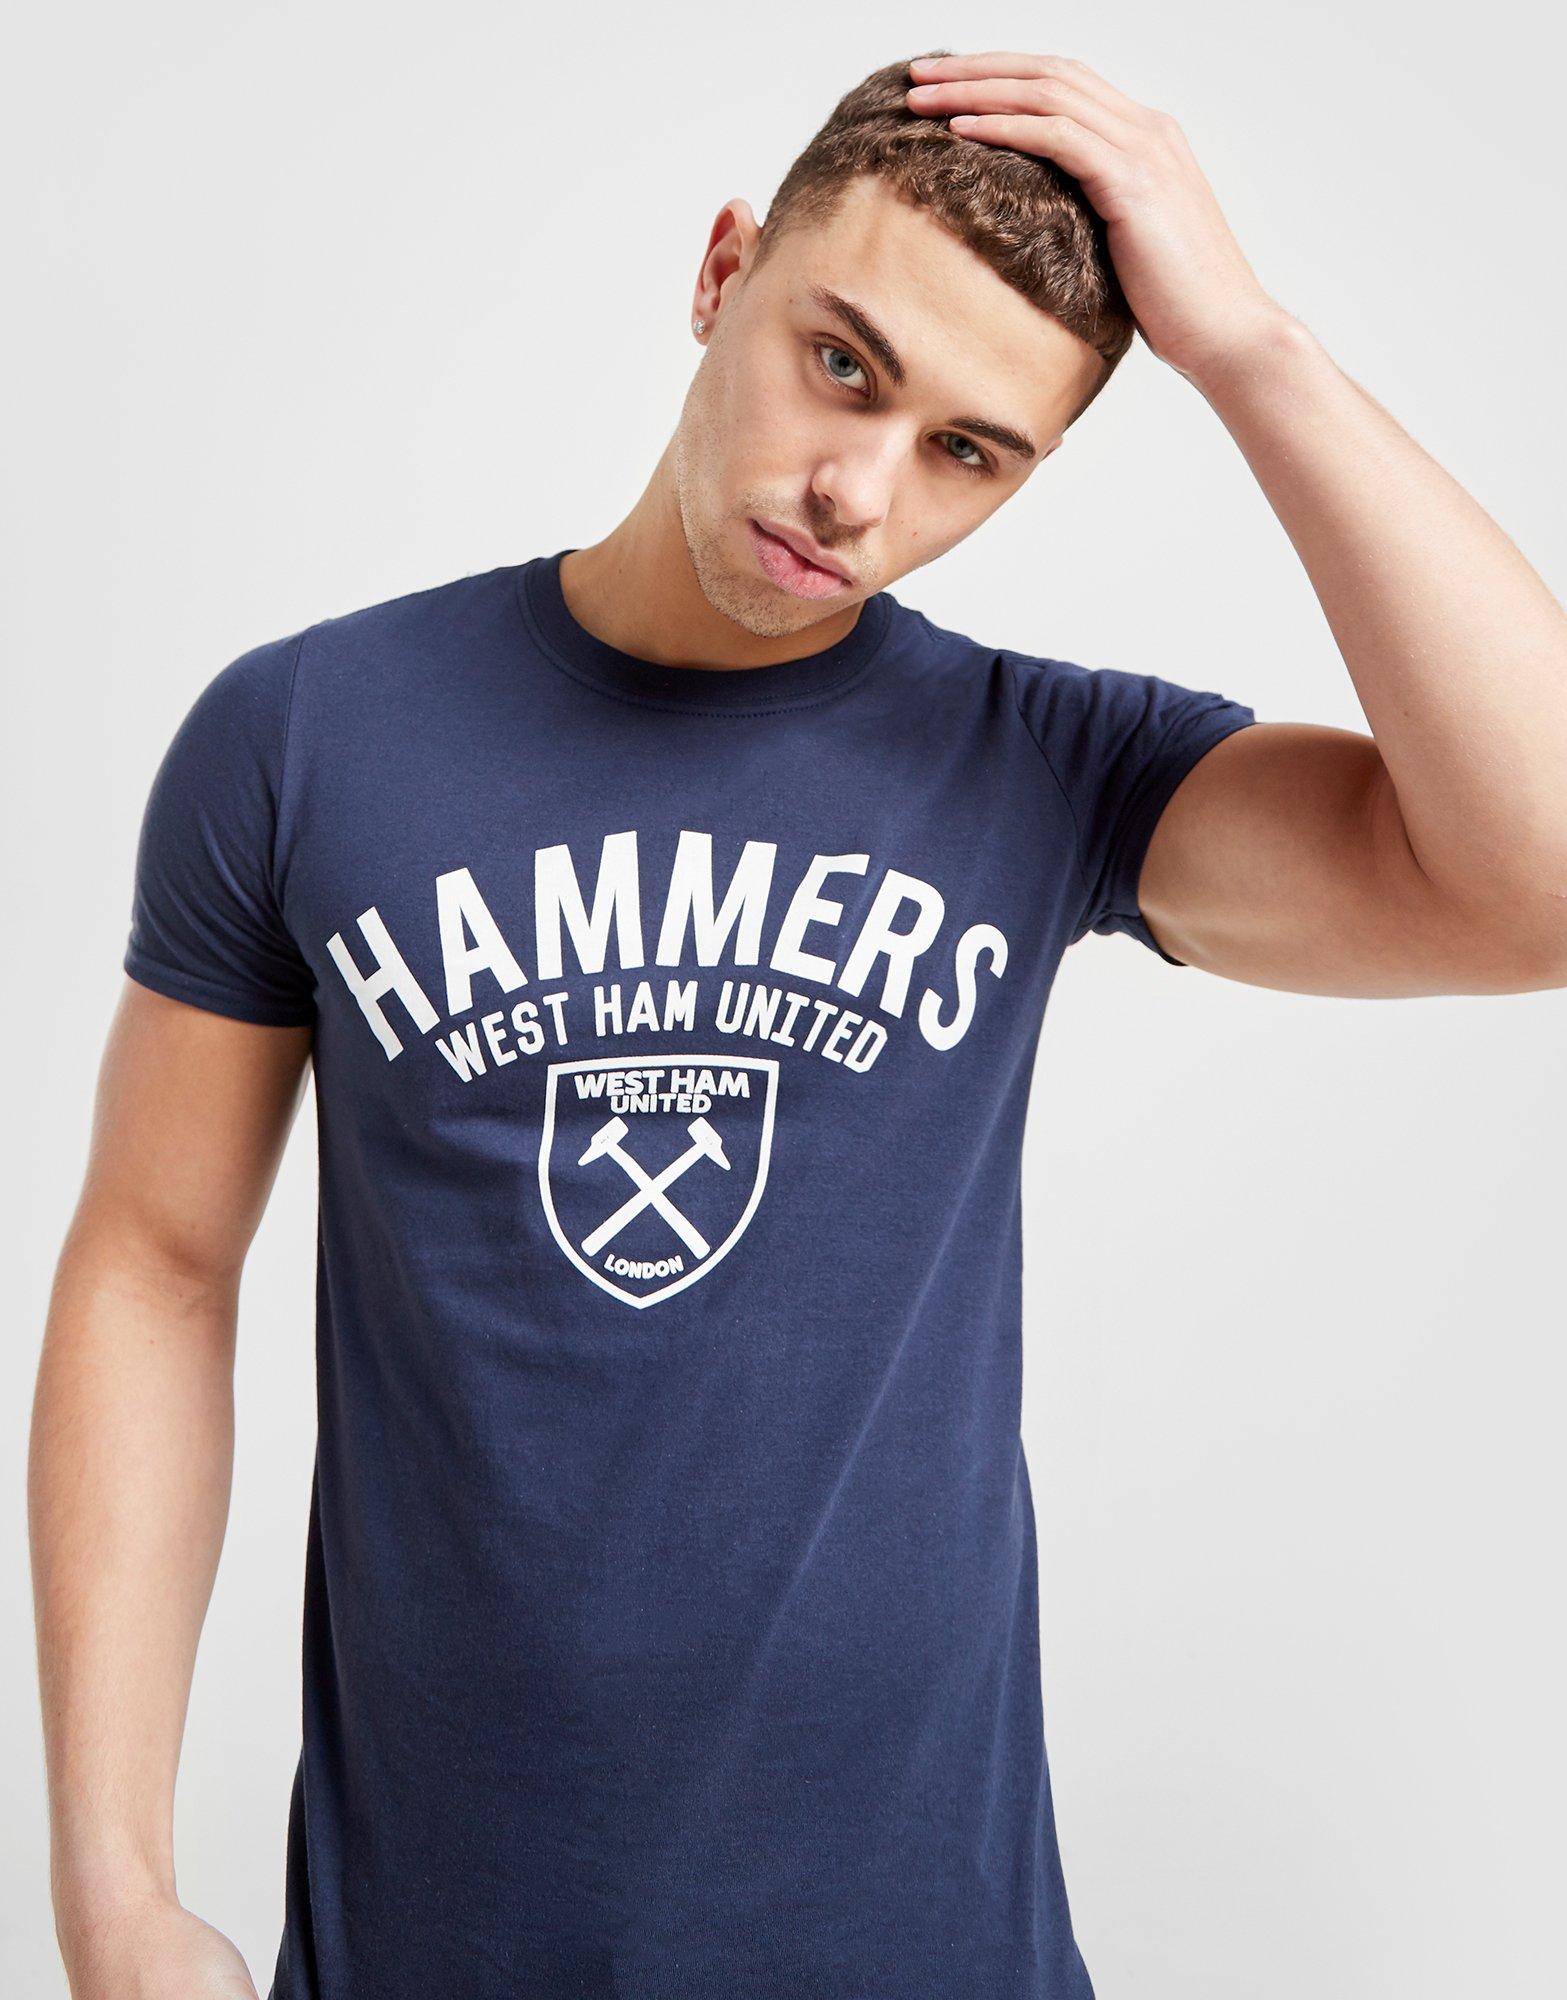 Official Team West Ham United Hammers T Shirt Herren